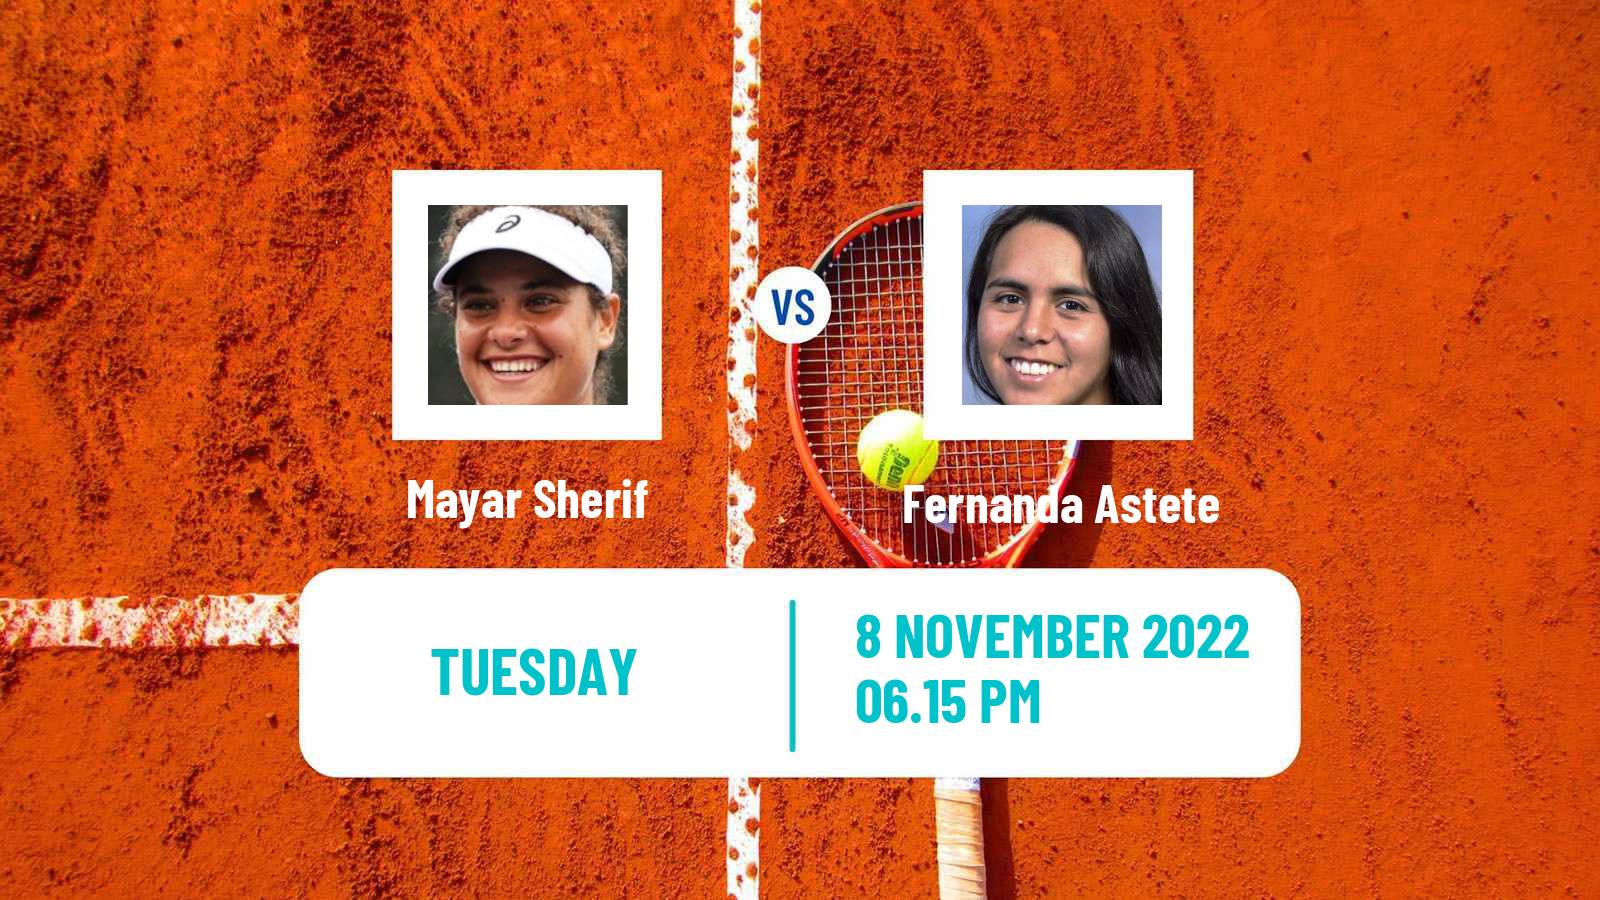 Tennis ATP Challenger Mayar Sherif - Fernanda Astete